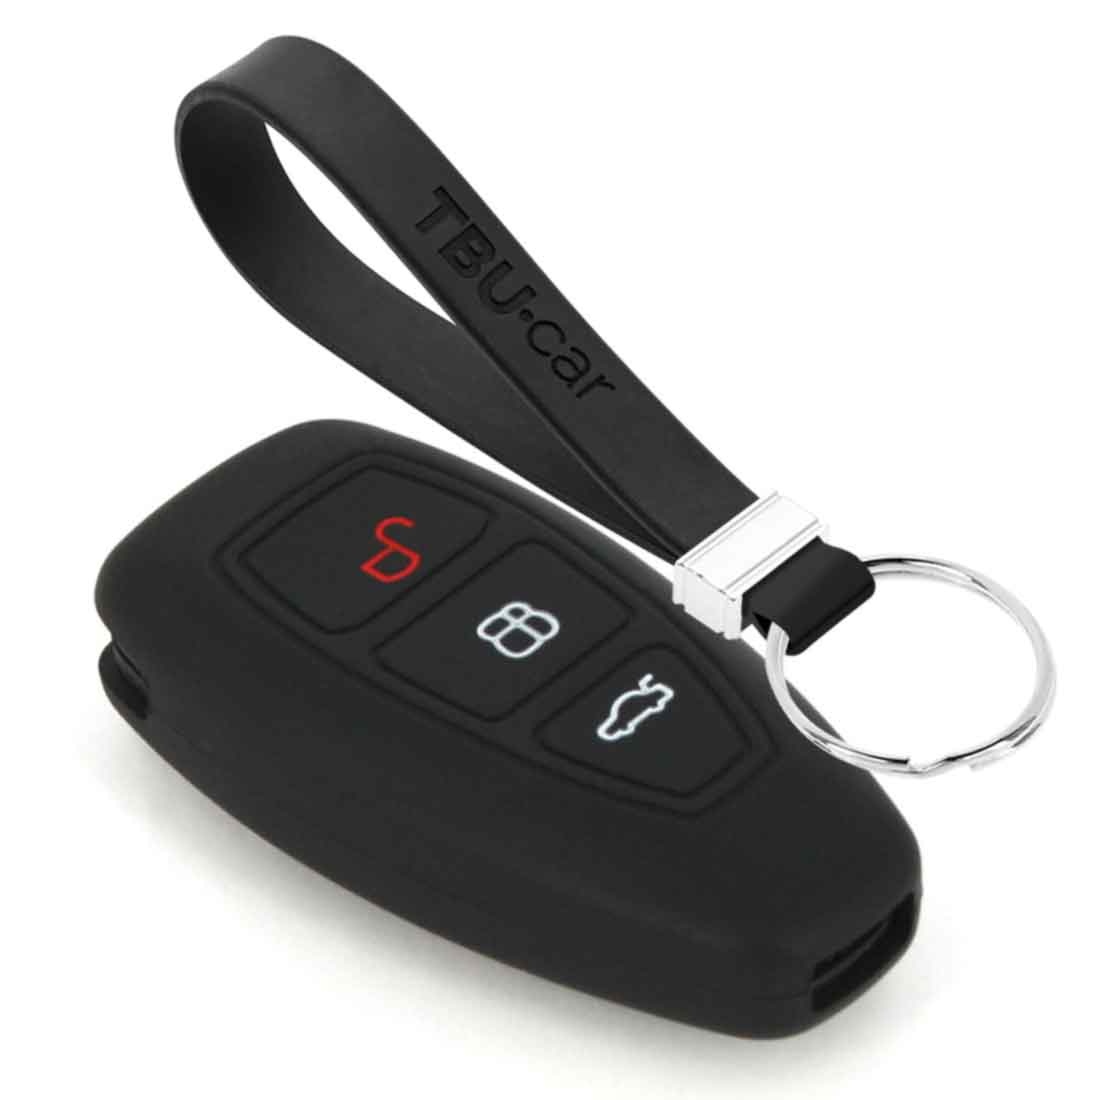 TBU car TBU car Autoschlüssel Hülle kompatibel mit Ford 3 Tasten (Keyless Entry) - Schutzhülle aus Silikon - Auto Schlüsselhülle Cover in Schwarz